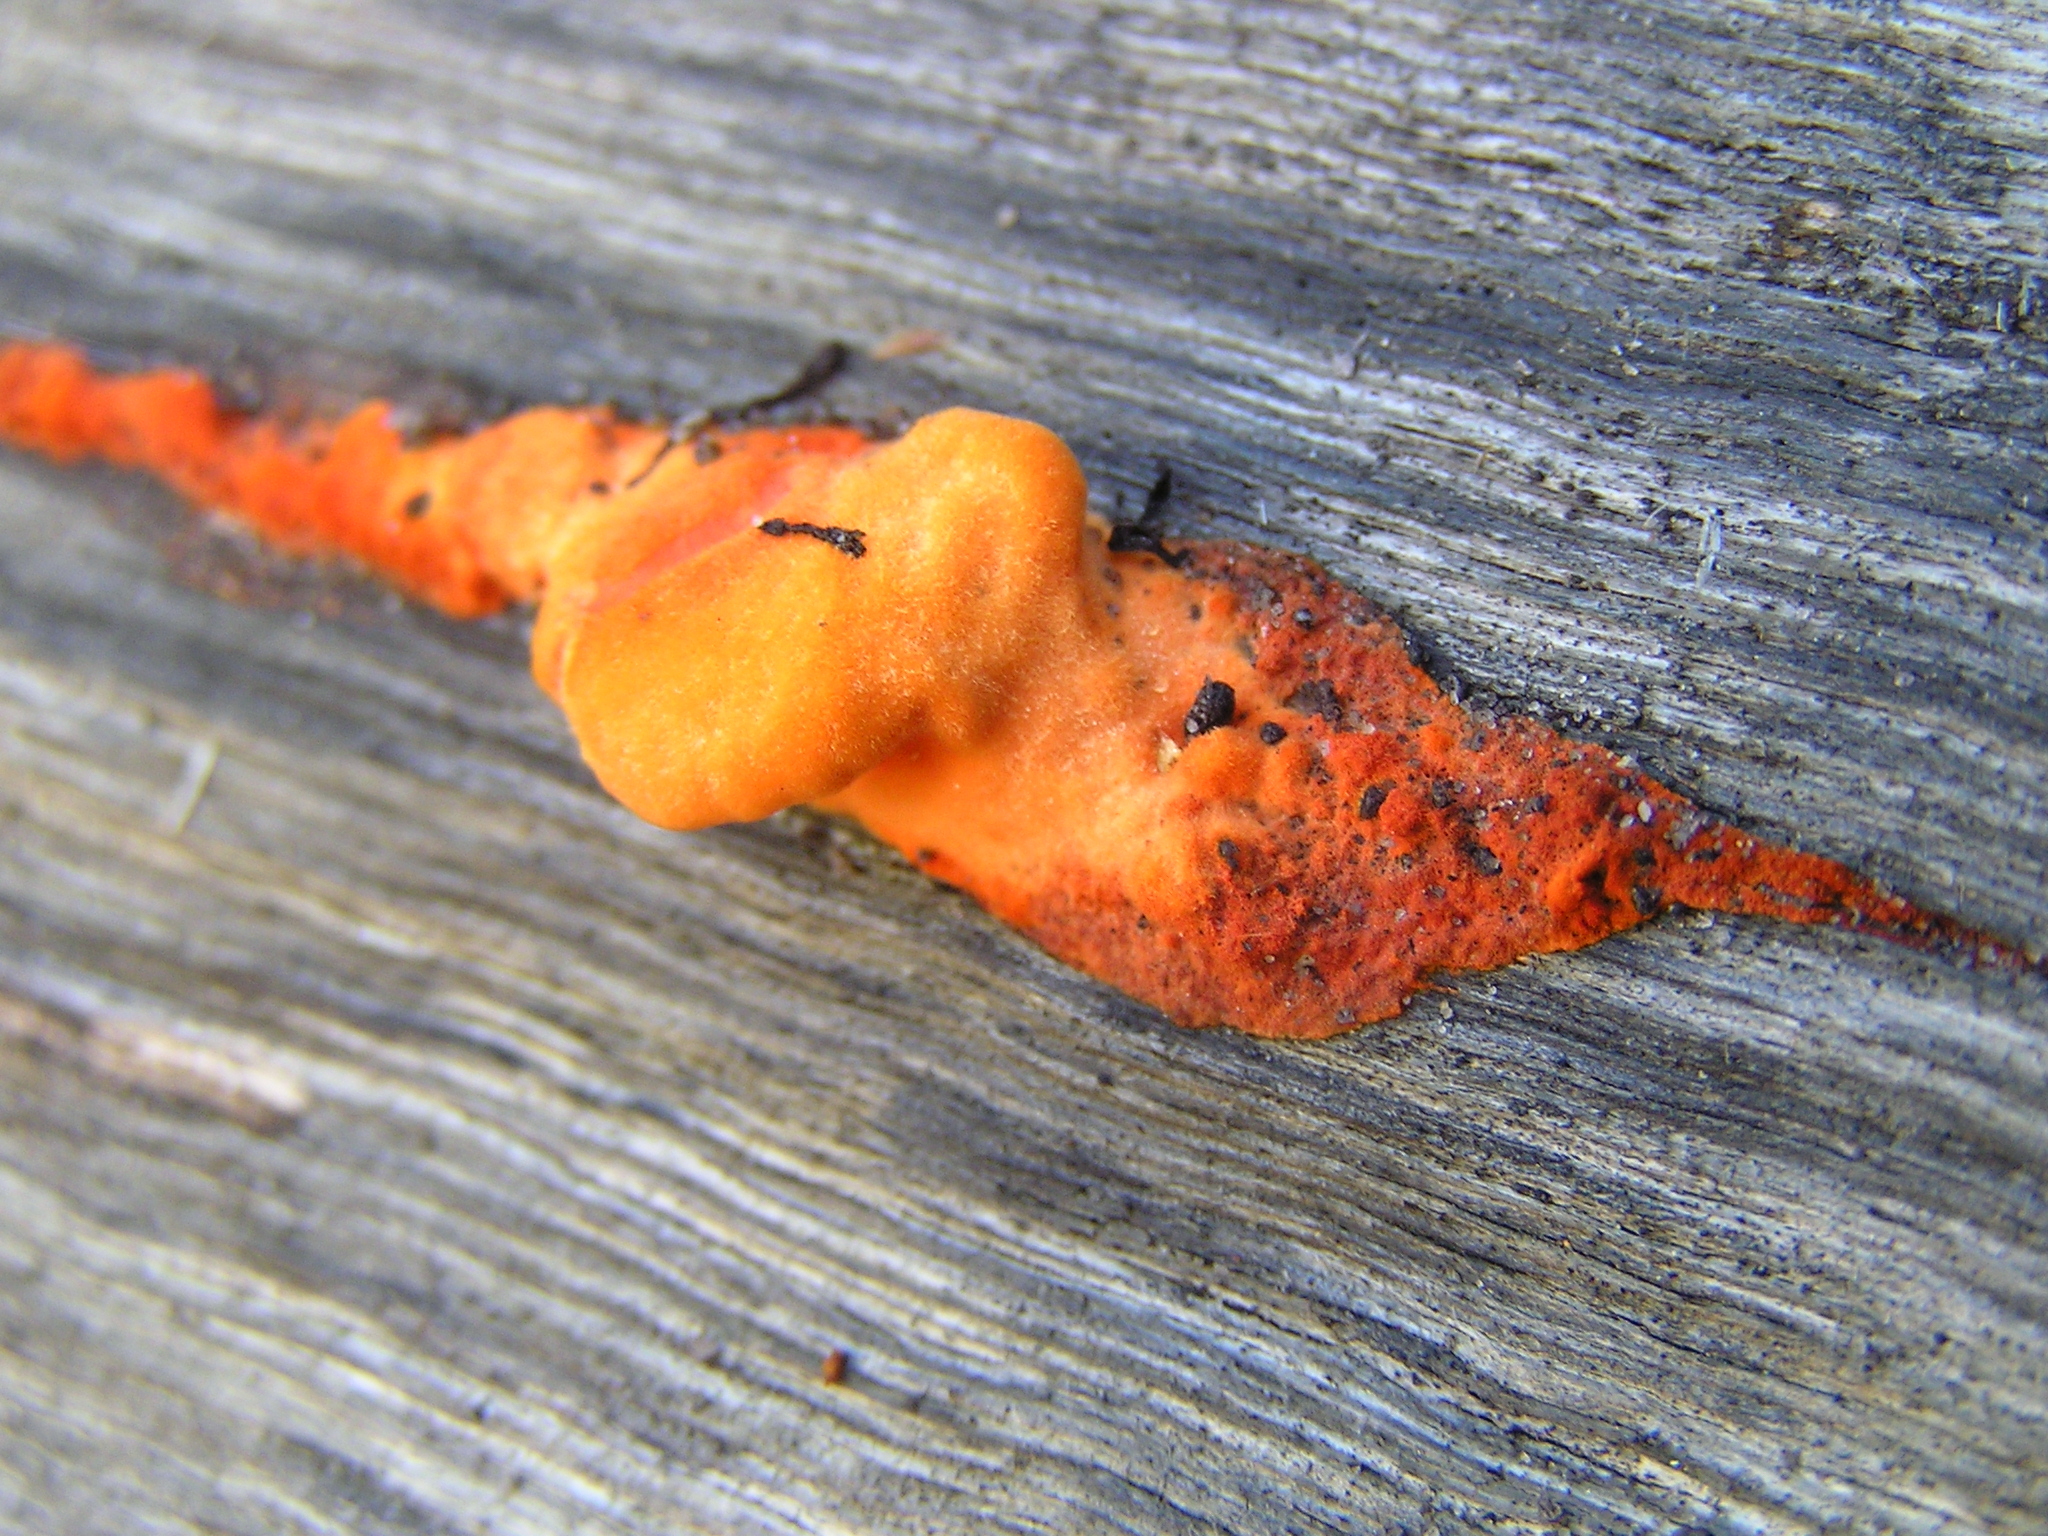 Orange fungus growing on wooden log. by jellybush on DeviantArt